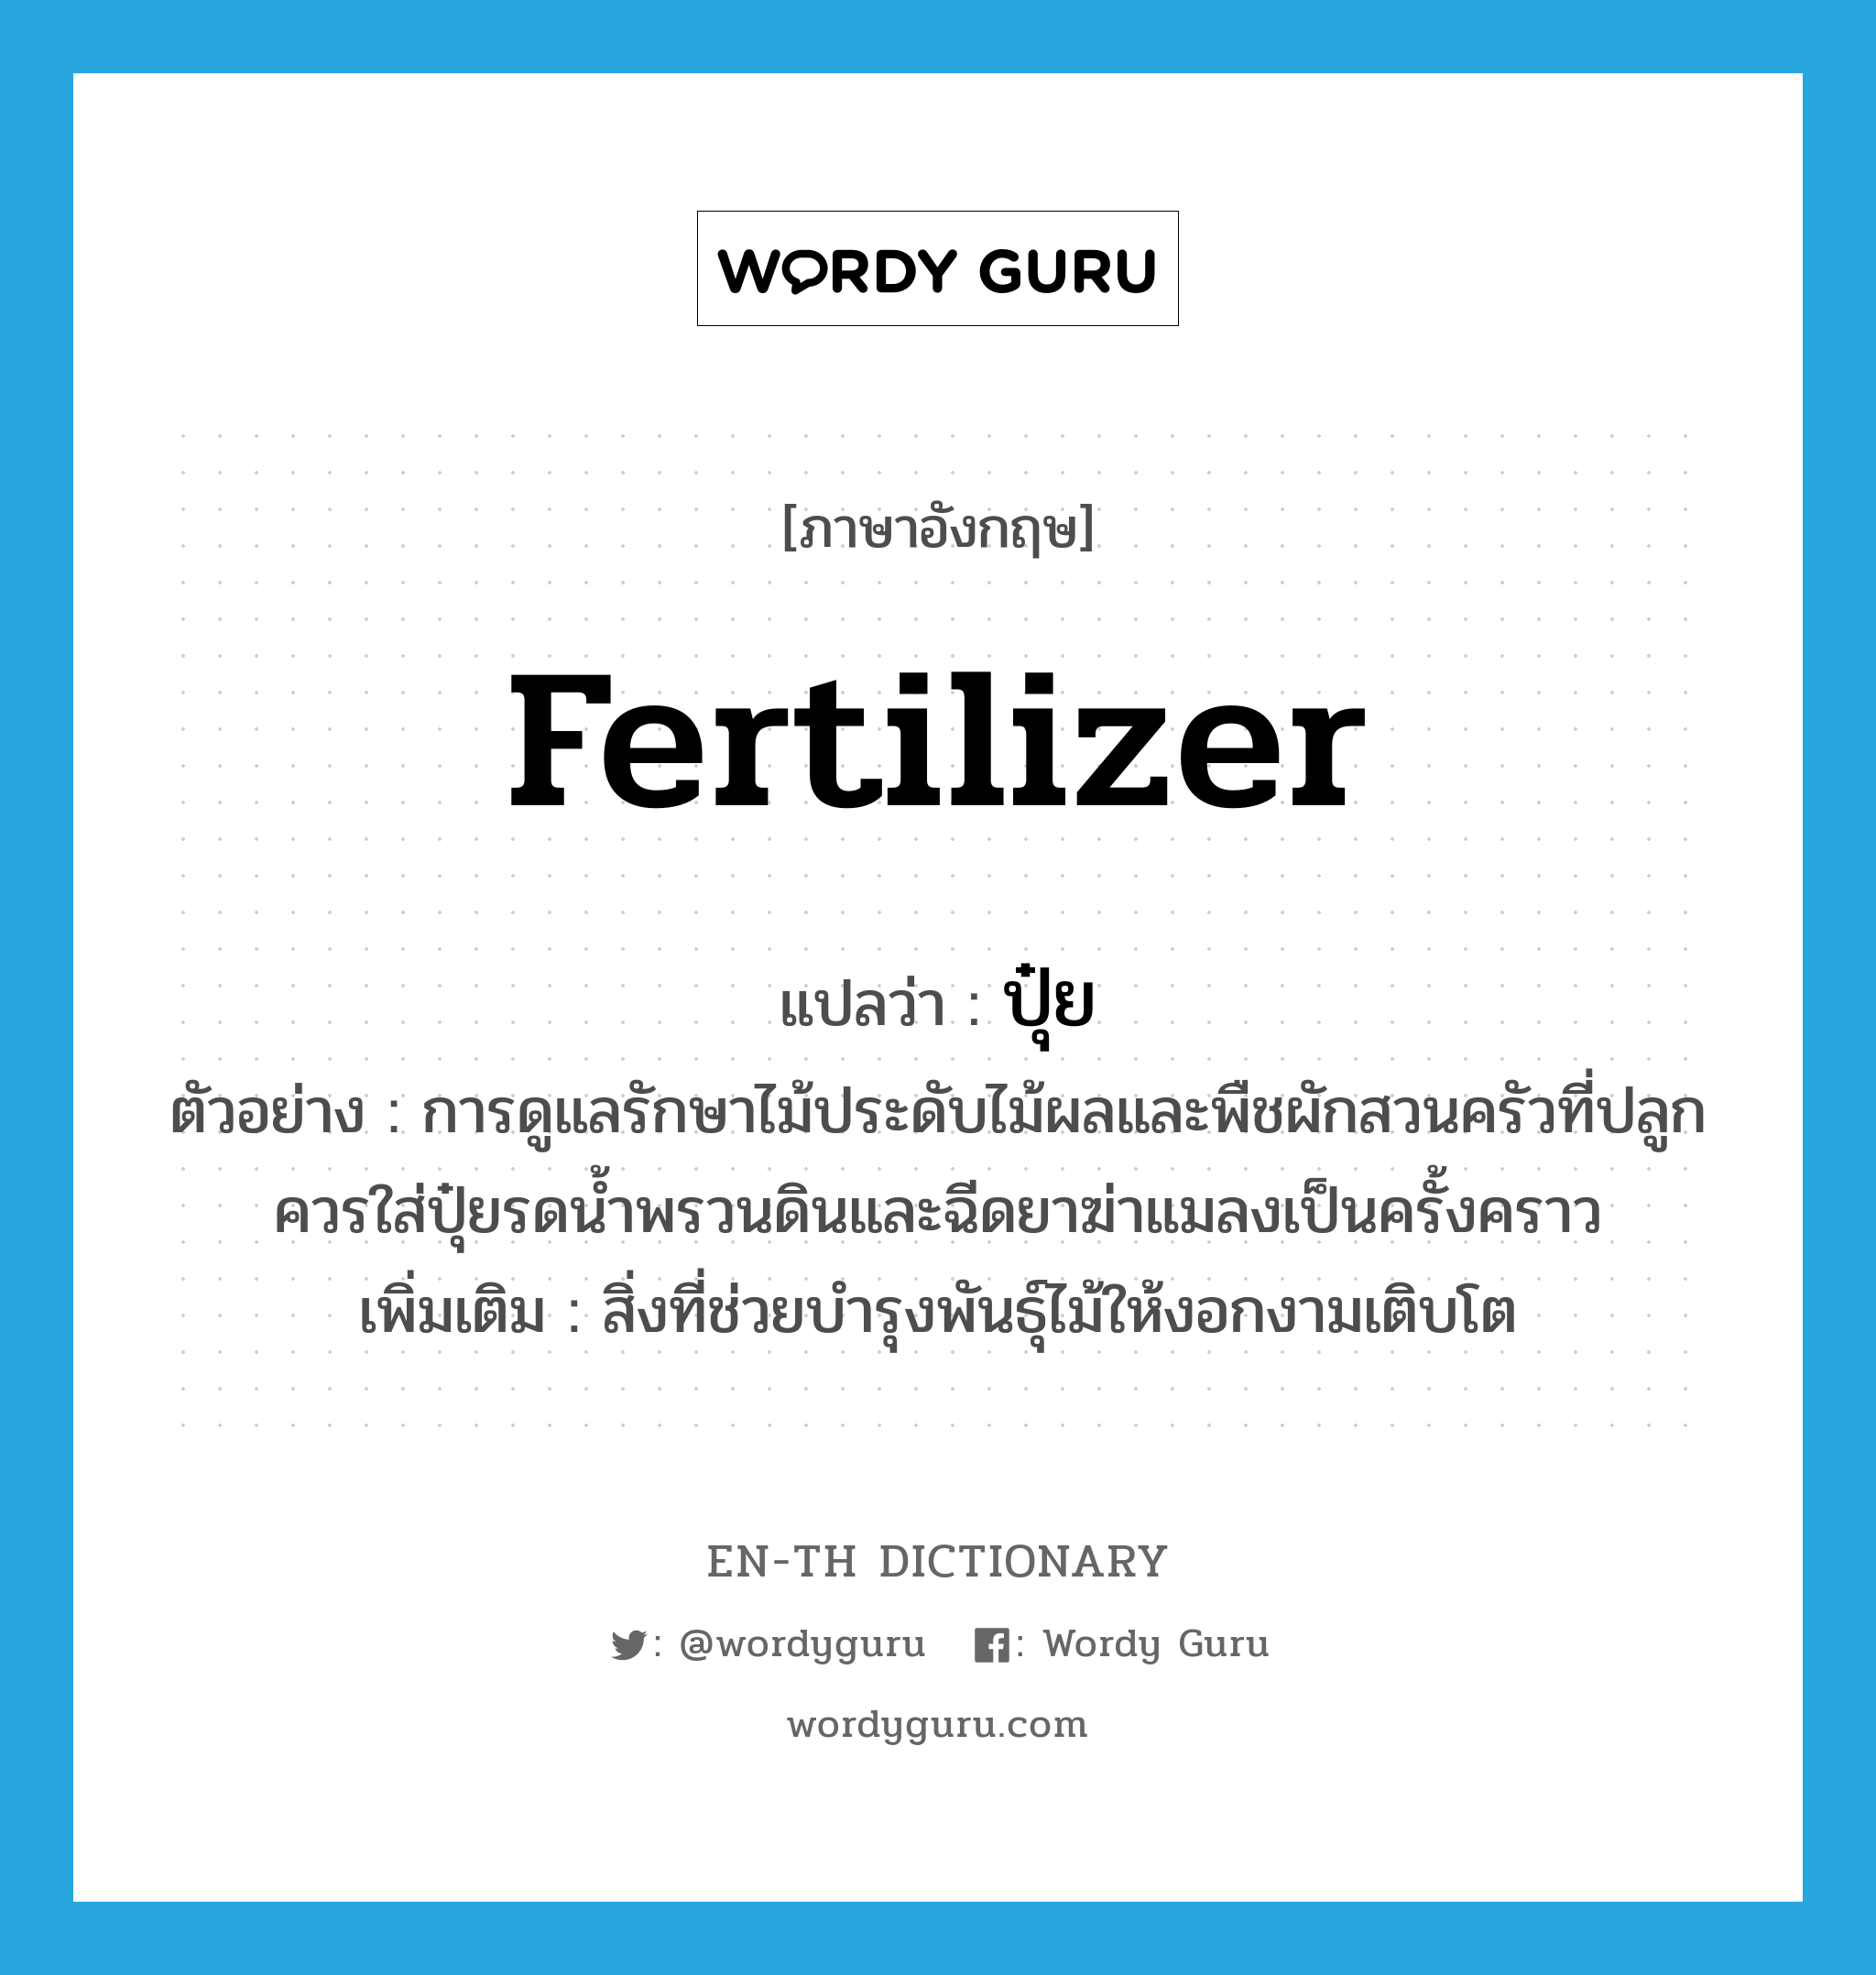 fertilizer แปลว่า?, คำศัพท์ภาษาอังกฤษ fertilizer แปลว่า ปุ๋ย ประเภท N ตัวอย่าง การดูแลรักษาไม้ประดับไม้ผลและพืชผักสวนครัวที่ปลูกควรใส่ปุ๋ยรดน้ำพรวนดินและฉีดยาฆ่าแมลงเป็นครั้งคราว เพิ่มเติม สิ่งที่ช่วยบำรุงพันธุ์ไม้ให้งอกงามเติบโต หมวด N